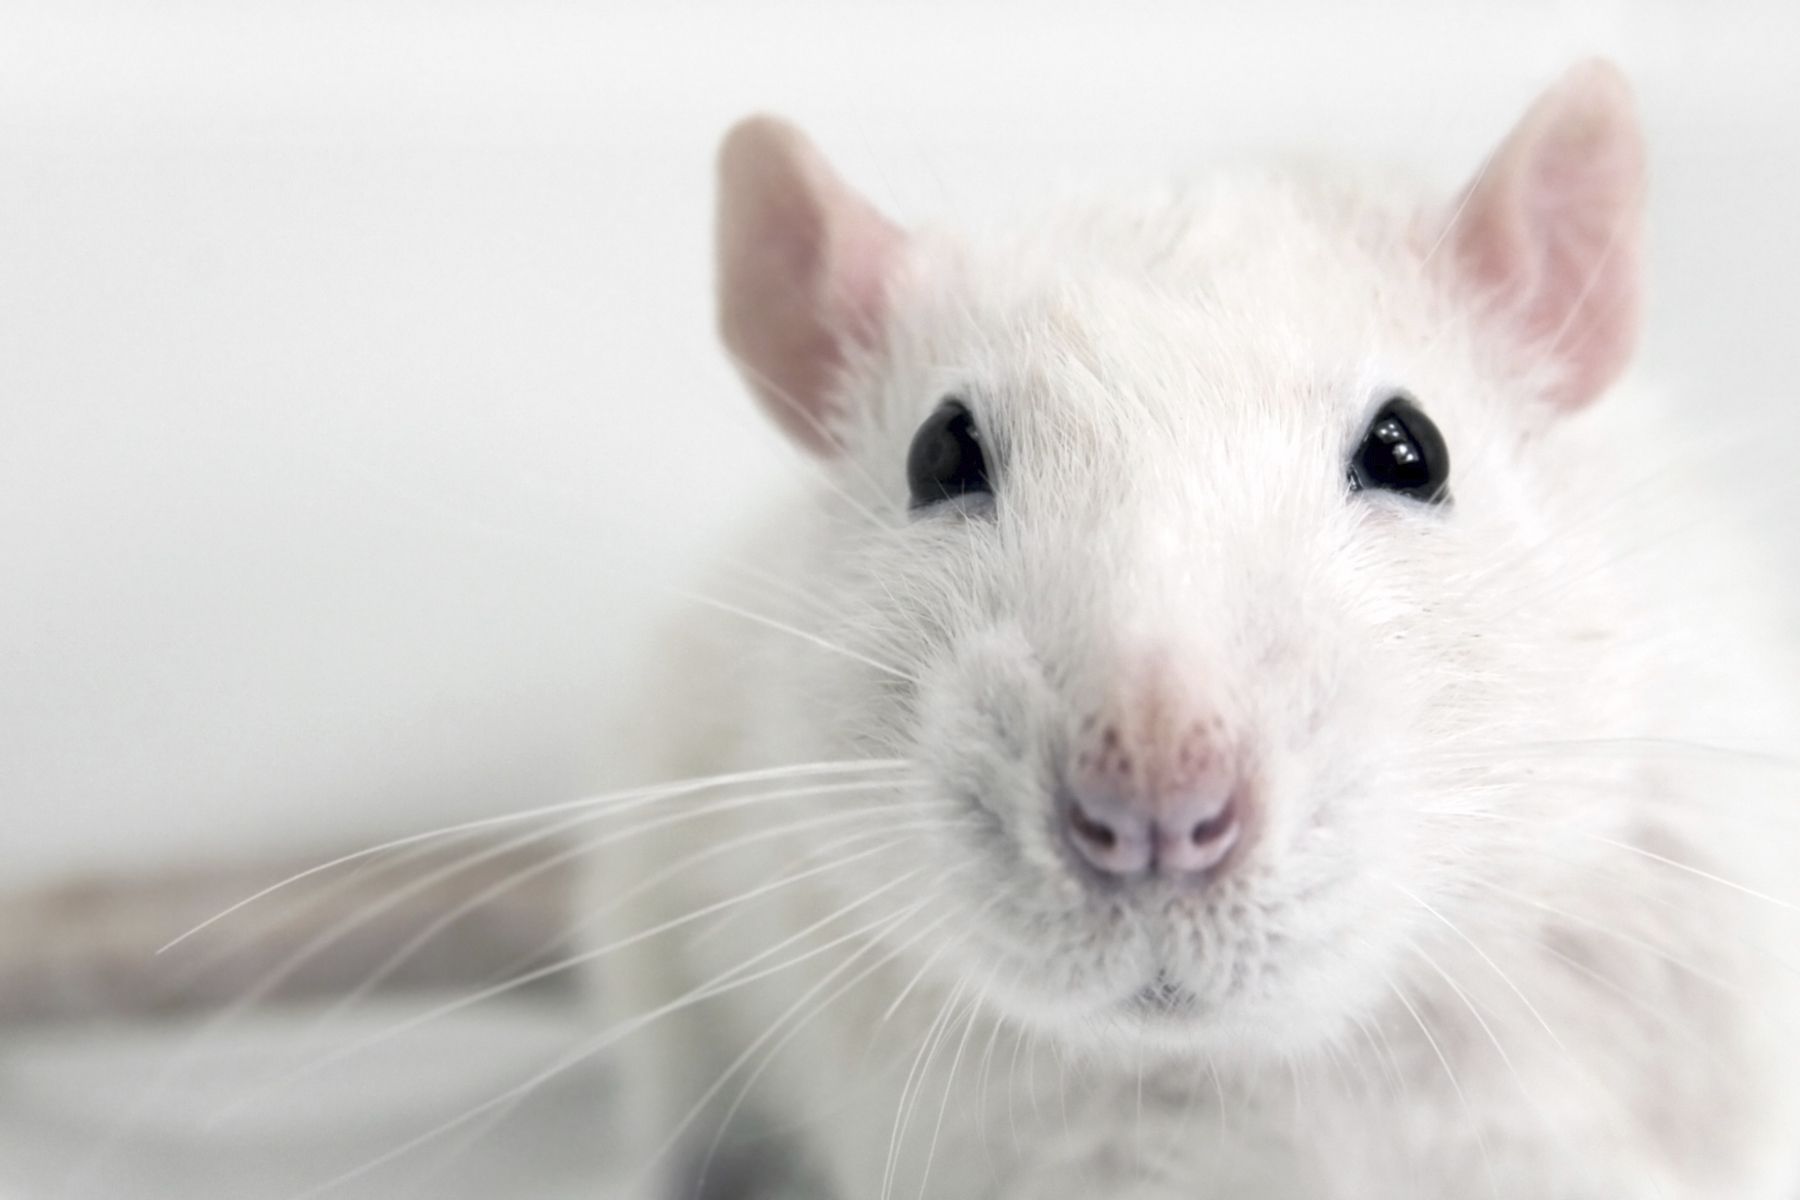 FRONT VIEW_rat. Animal close up, Image, Rats